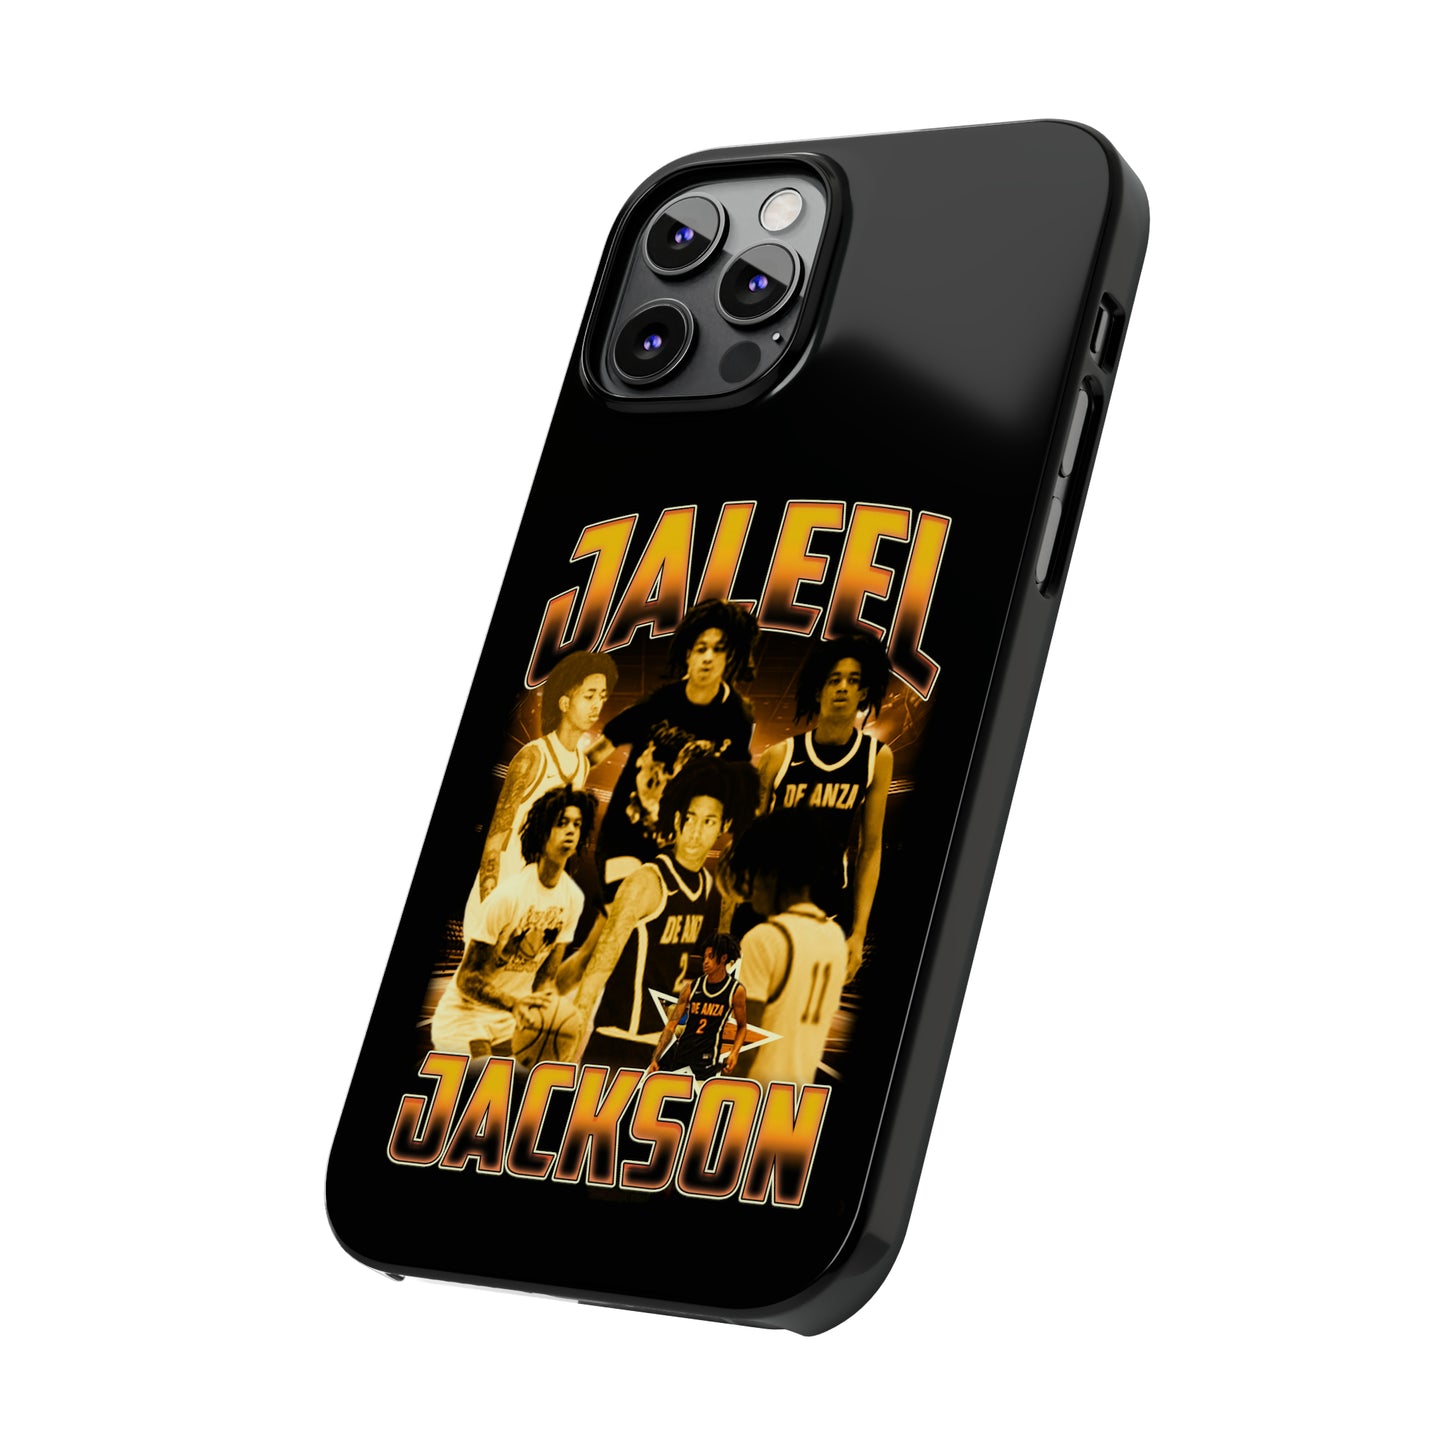 Jaleel Jackson Phone Case